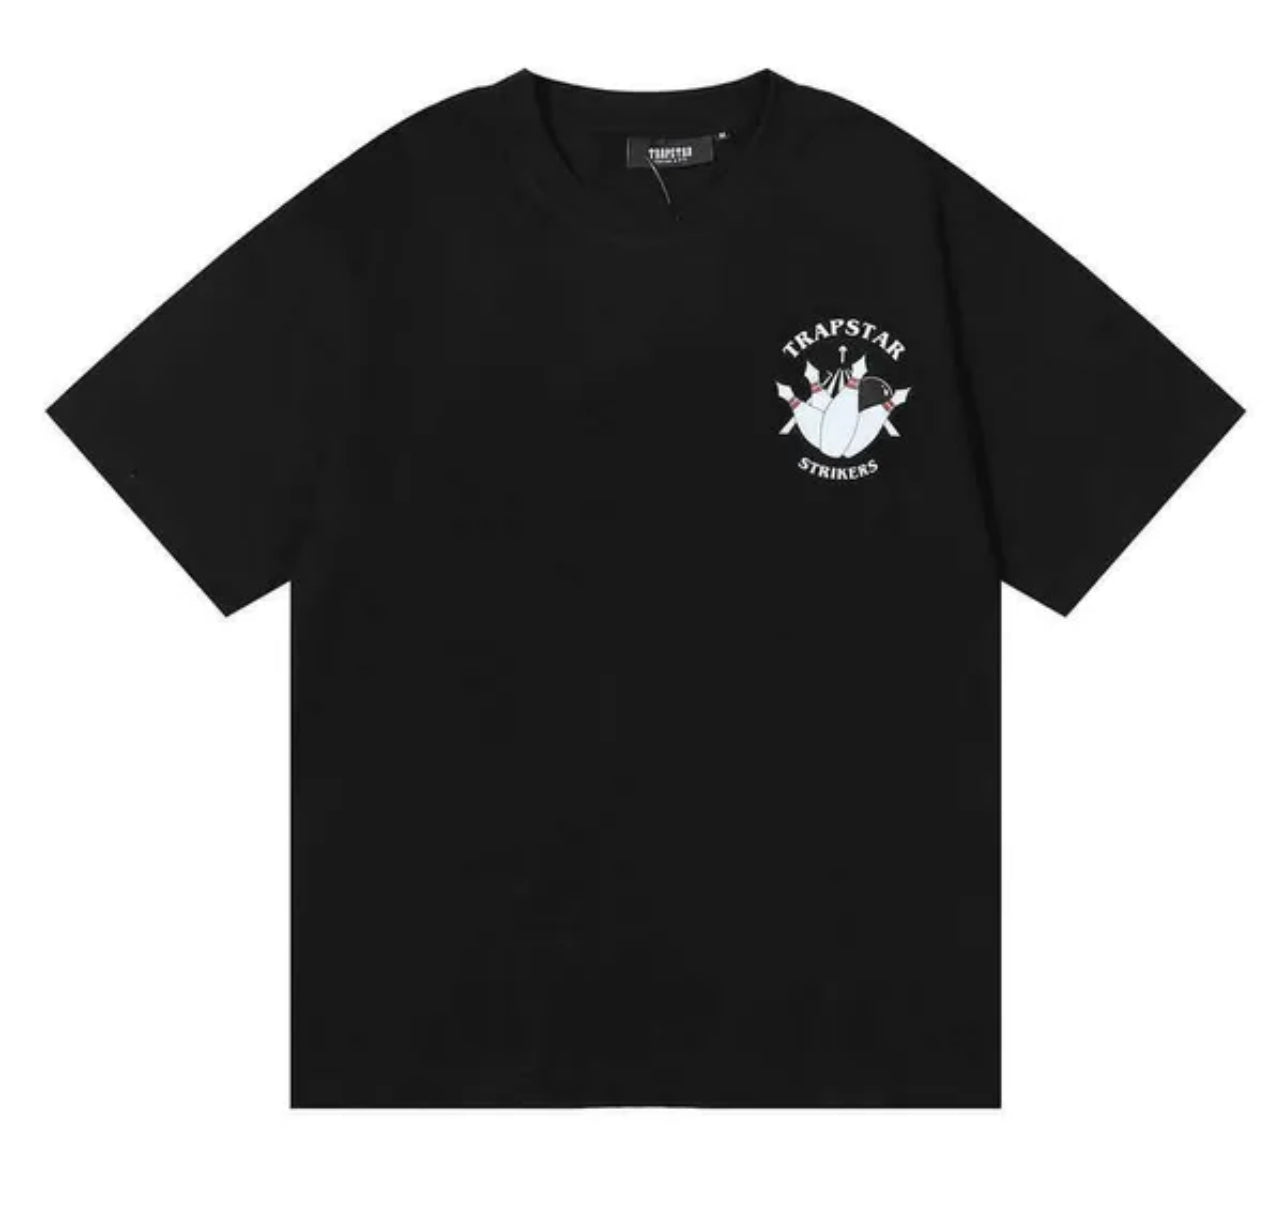 Trapstar Strikers T-Shirt